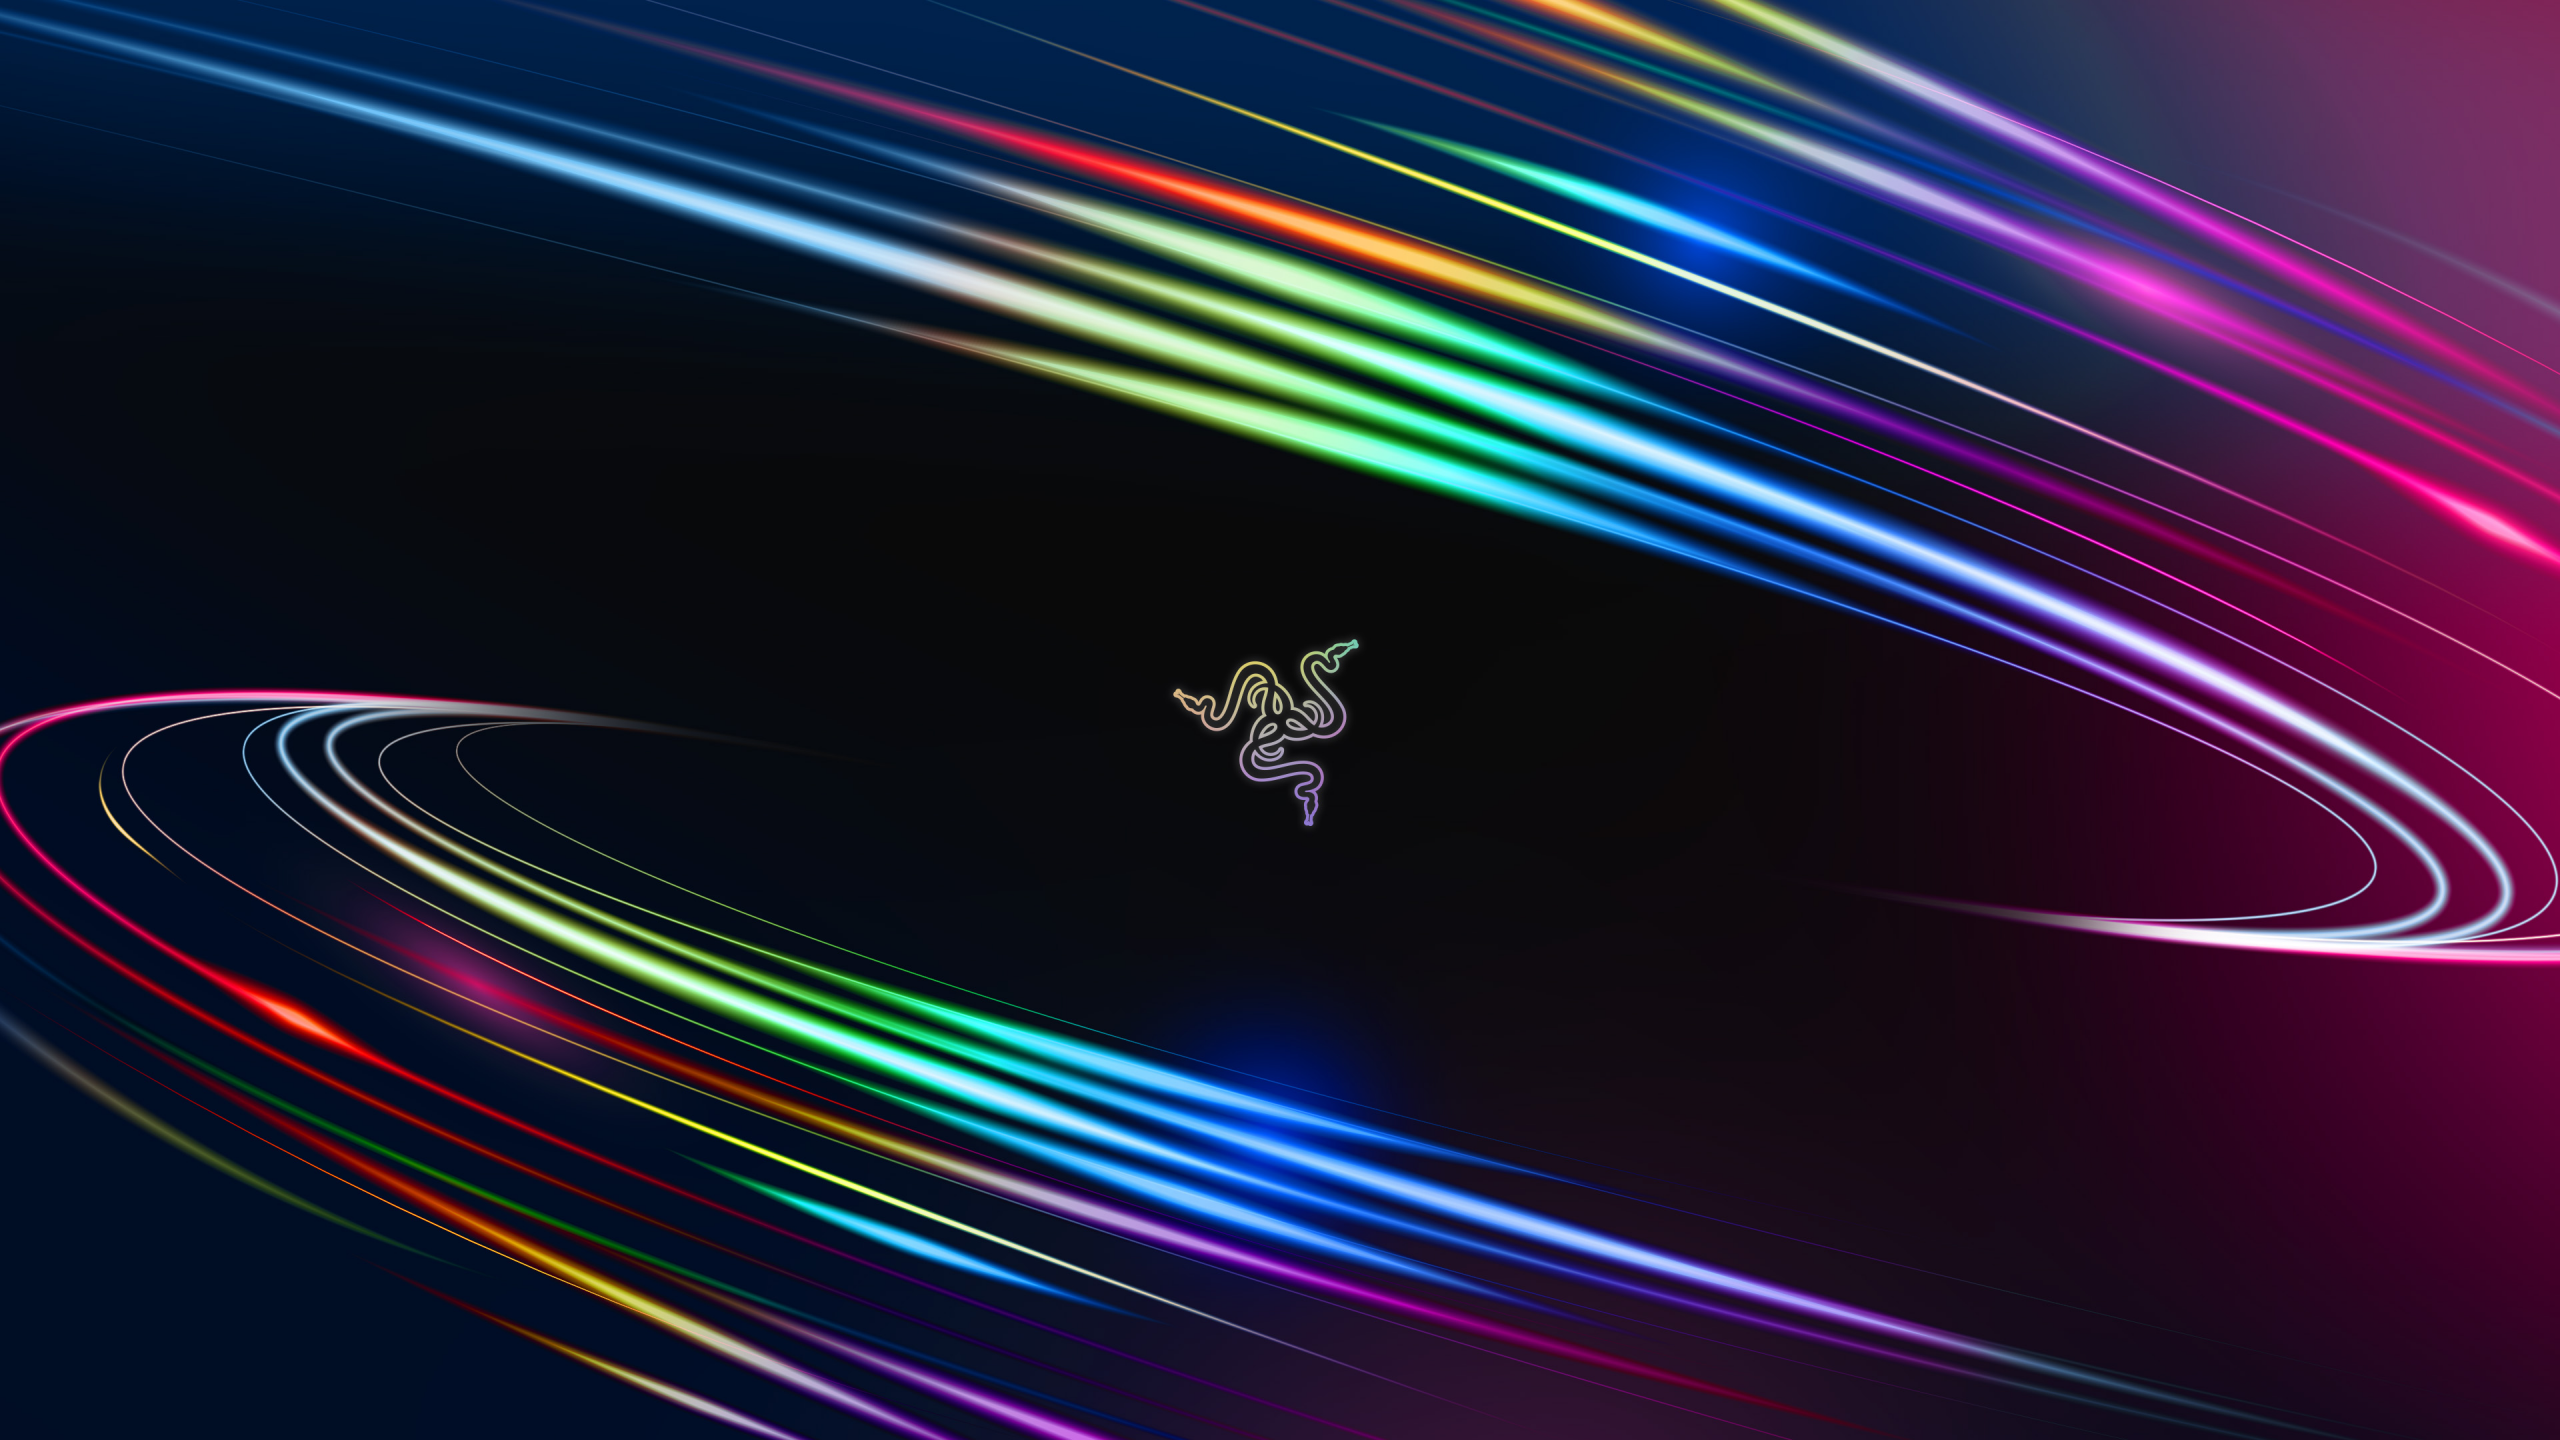 Vortex Wallpaper 4K, Waves, Spectrum, Razer, Colorful, Neon, Abstract